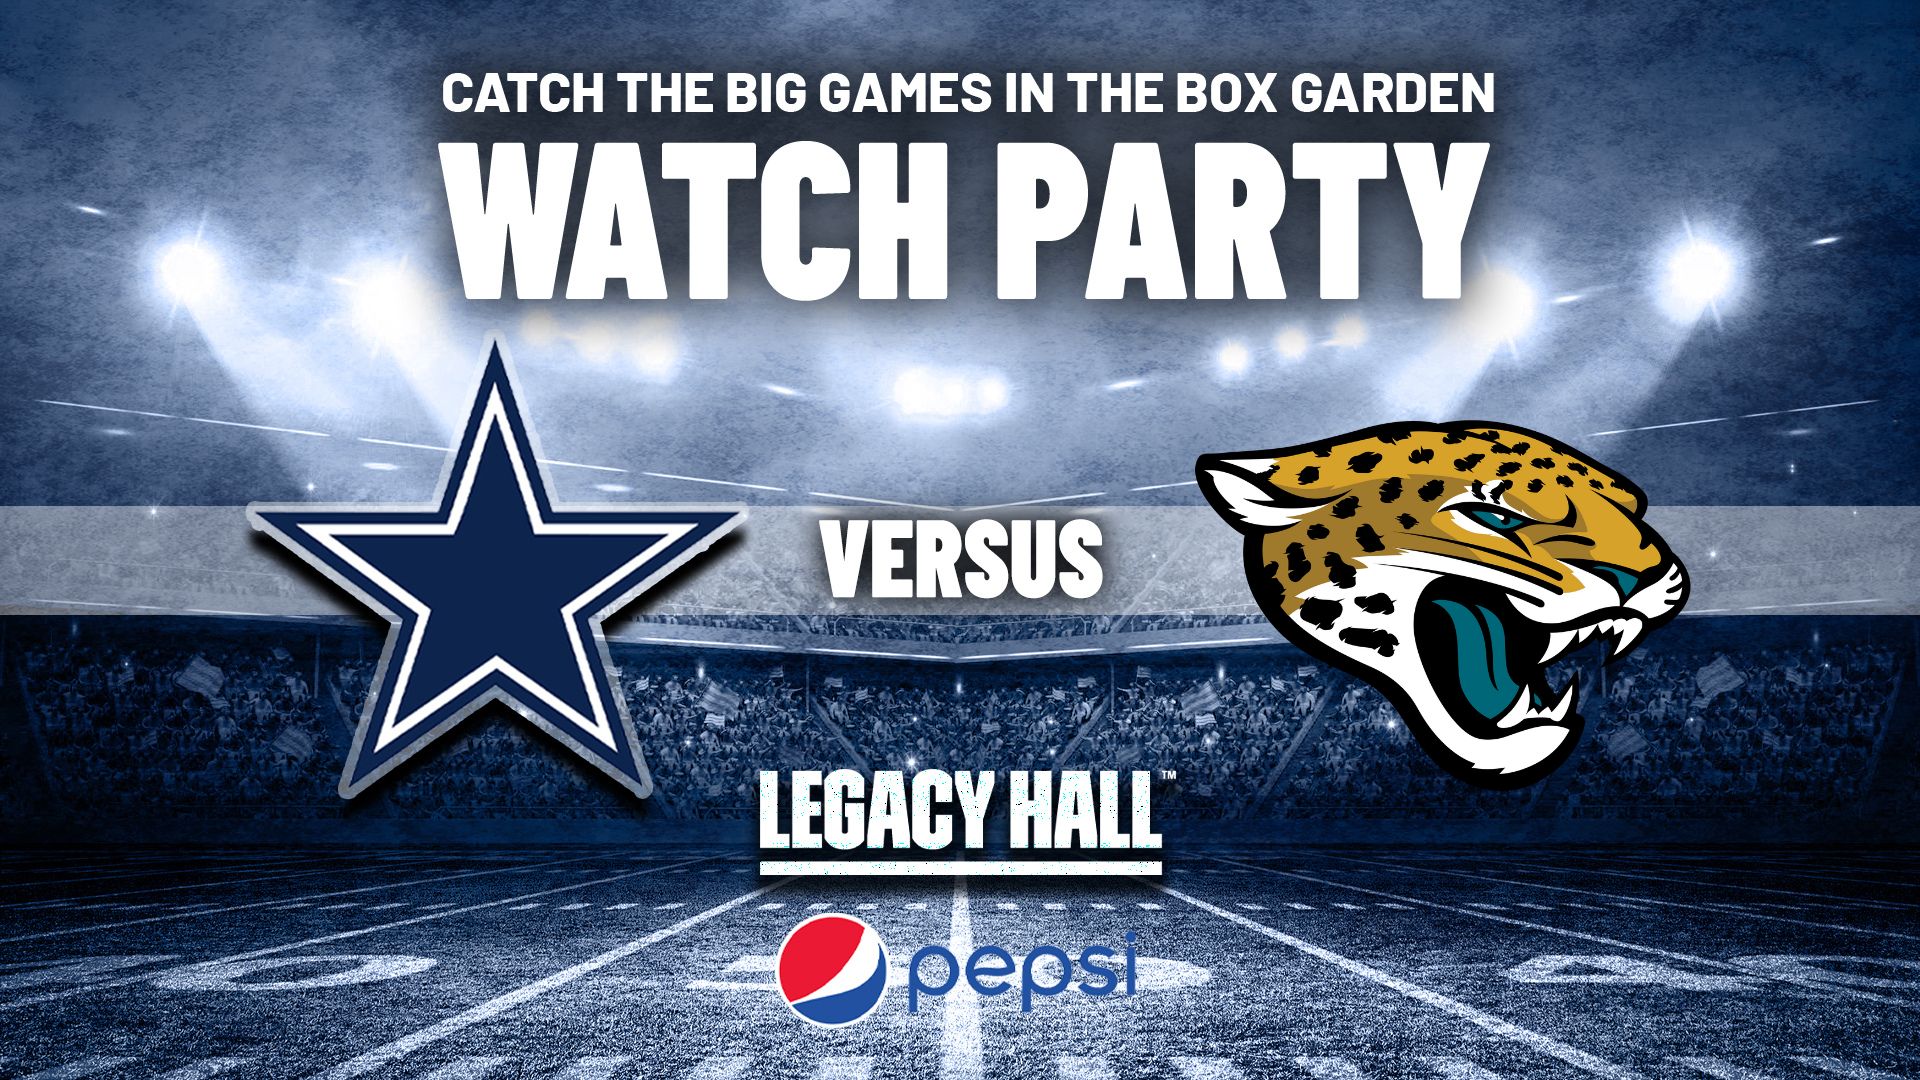 Cowboys vs. Jaguars Watch Party - hero